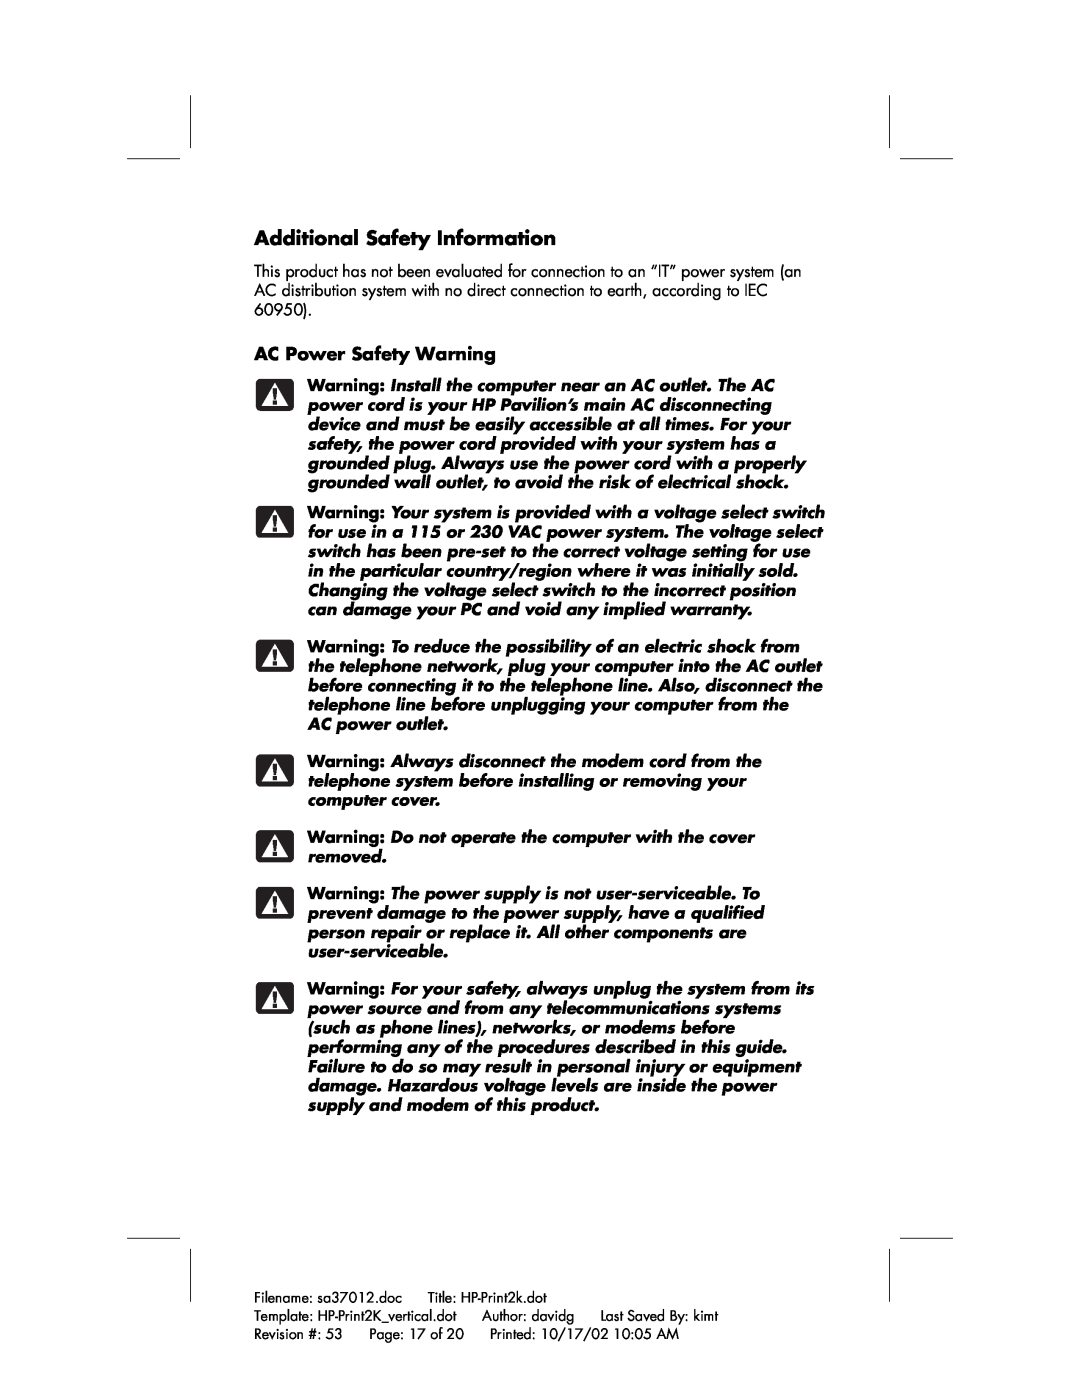 HP 744d (AP), 704d (AP), 734d (AP), 754d (AP), 774d (AP) manual Additional Safety Information, AC Power Safety Warning 